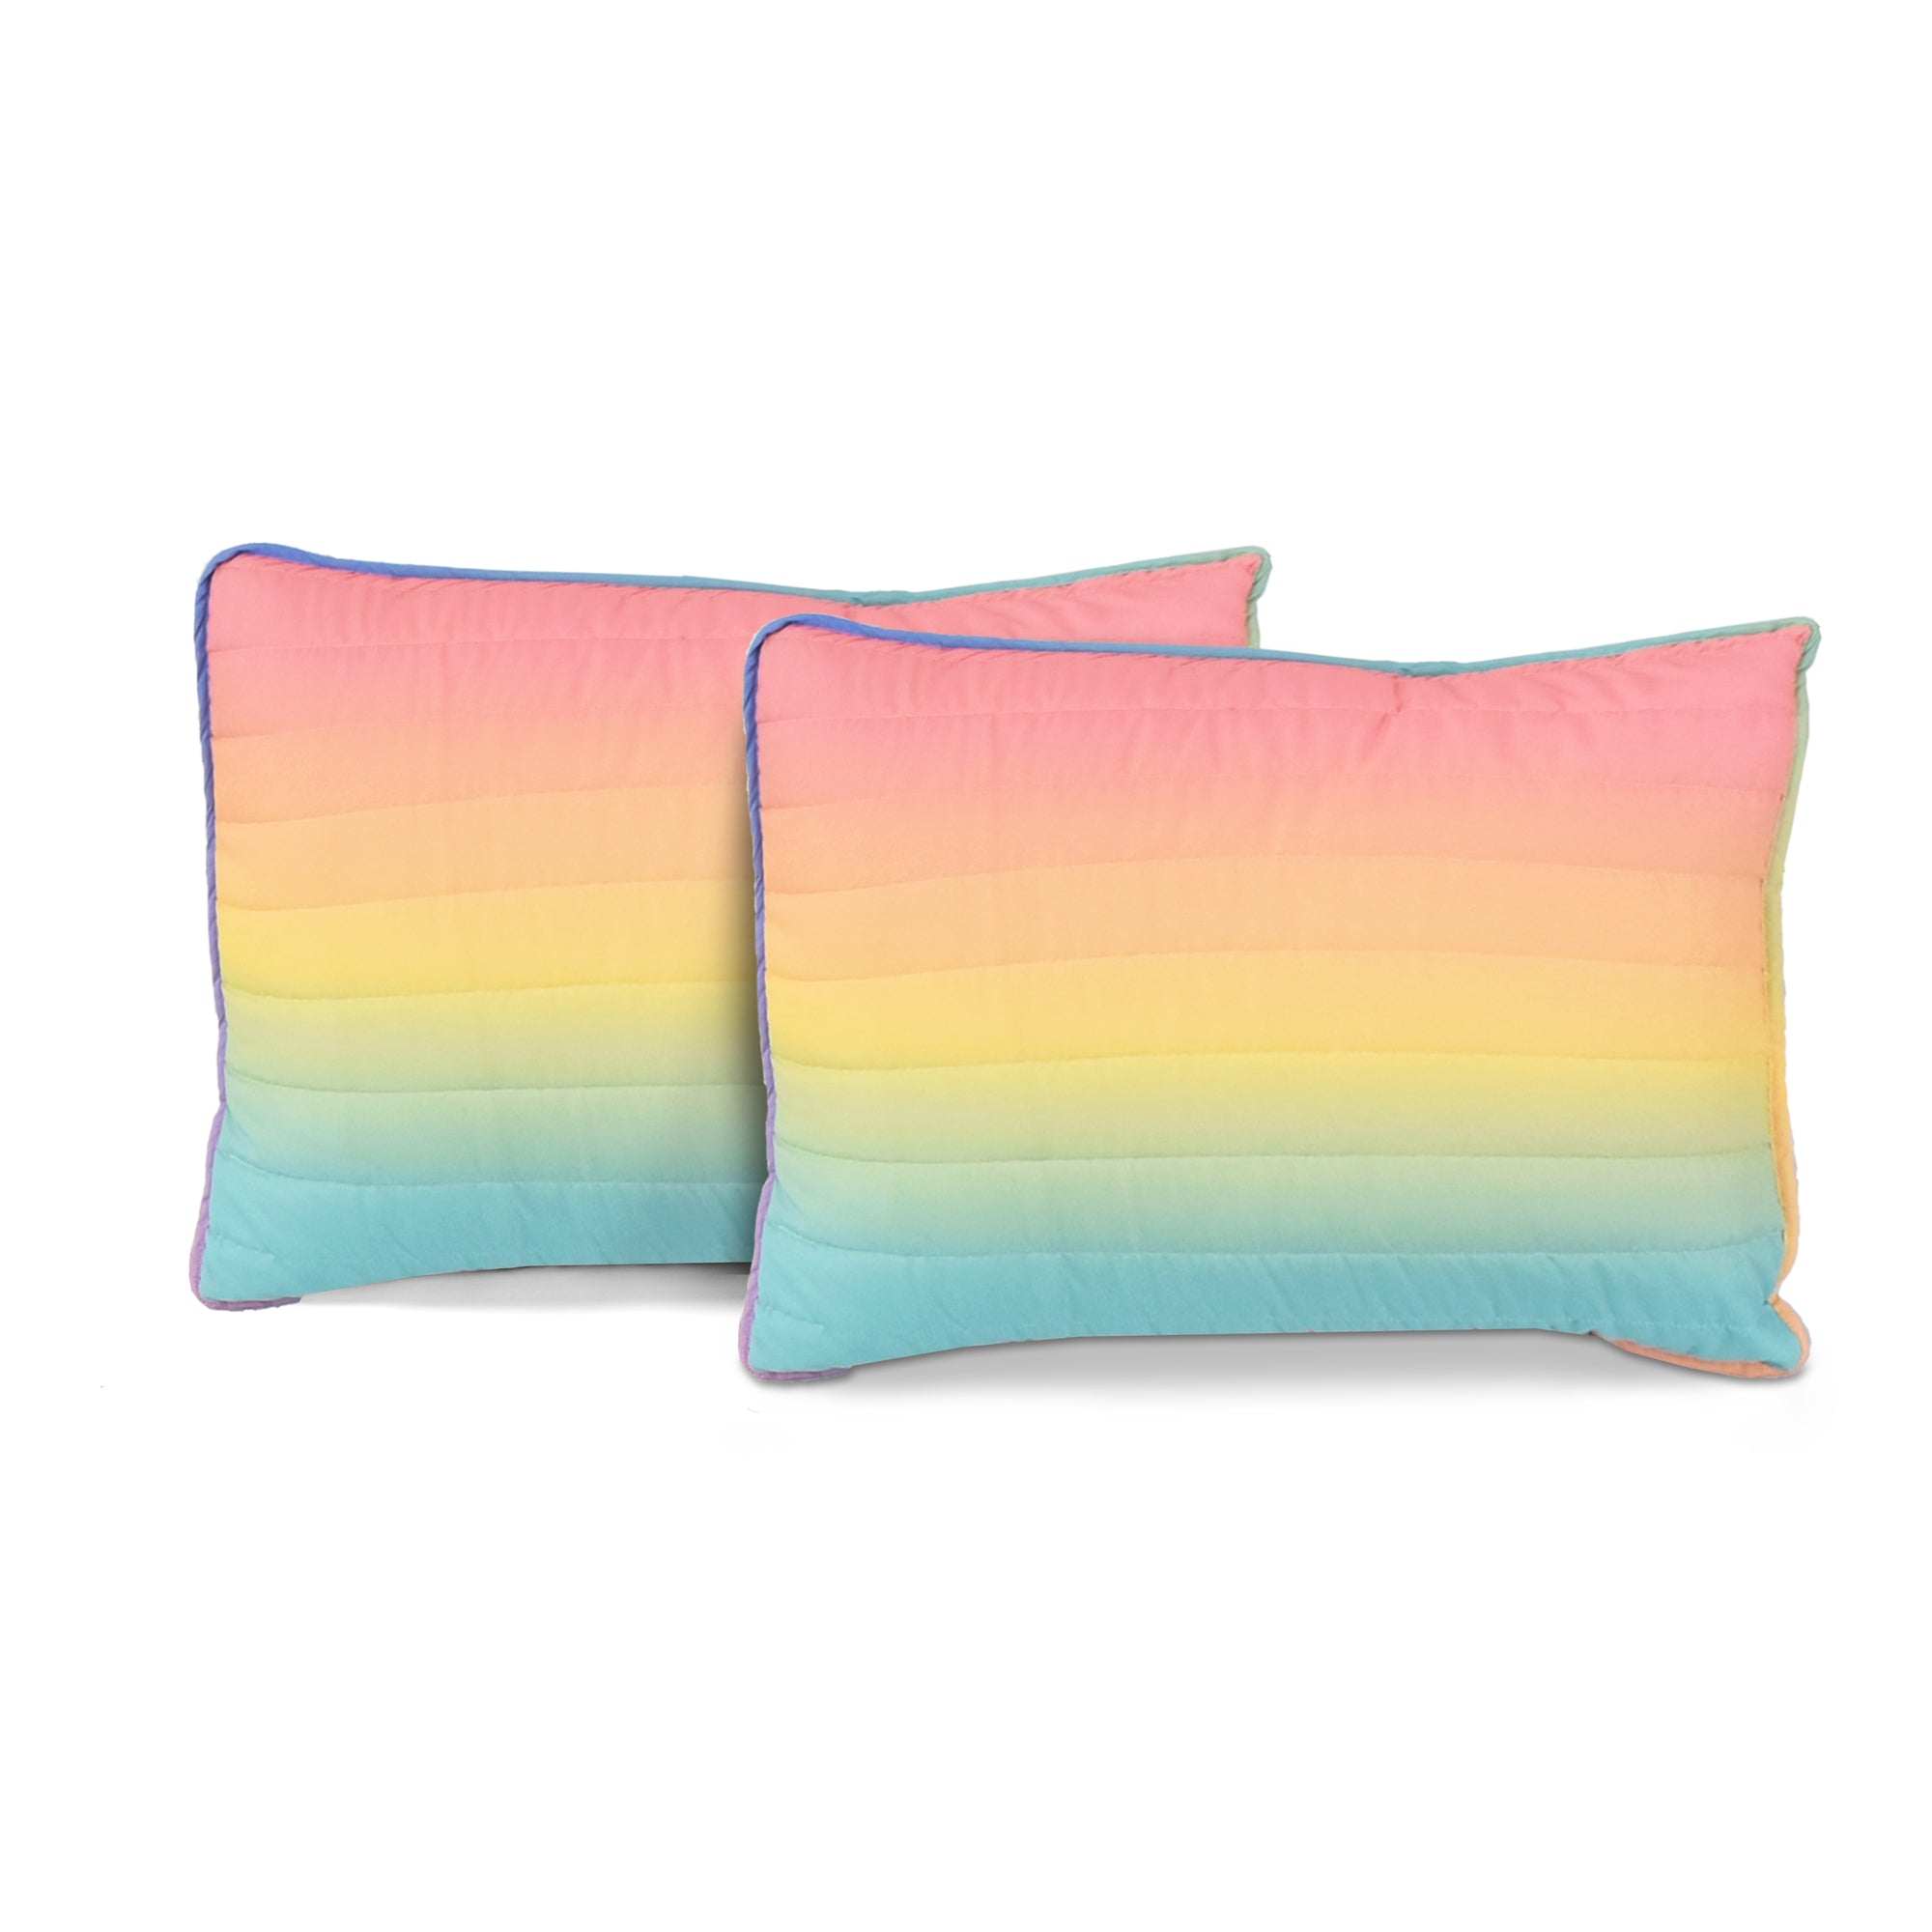 Felt rainbow hearts set - Pastel tones – K2CBlooms